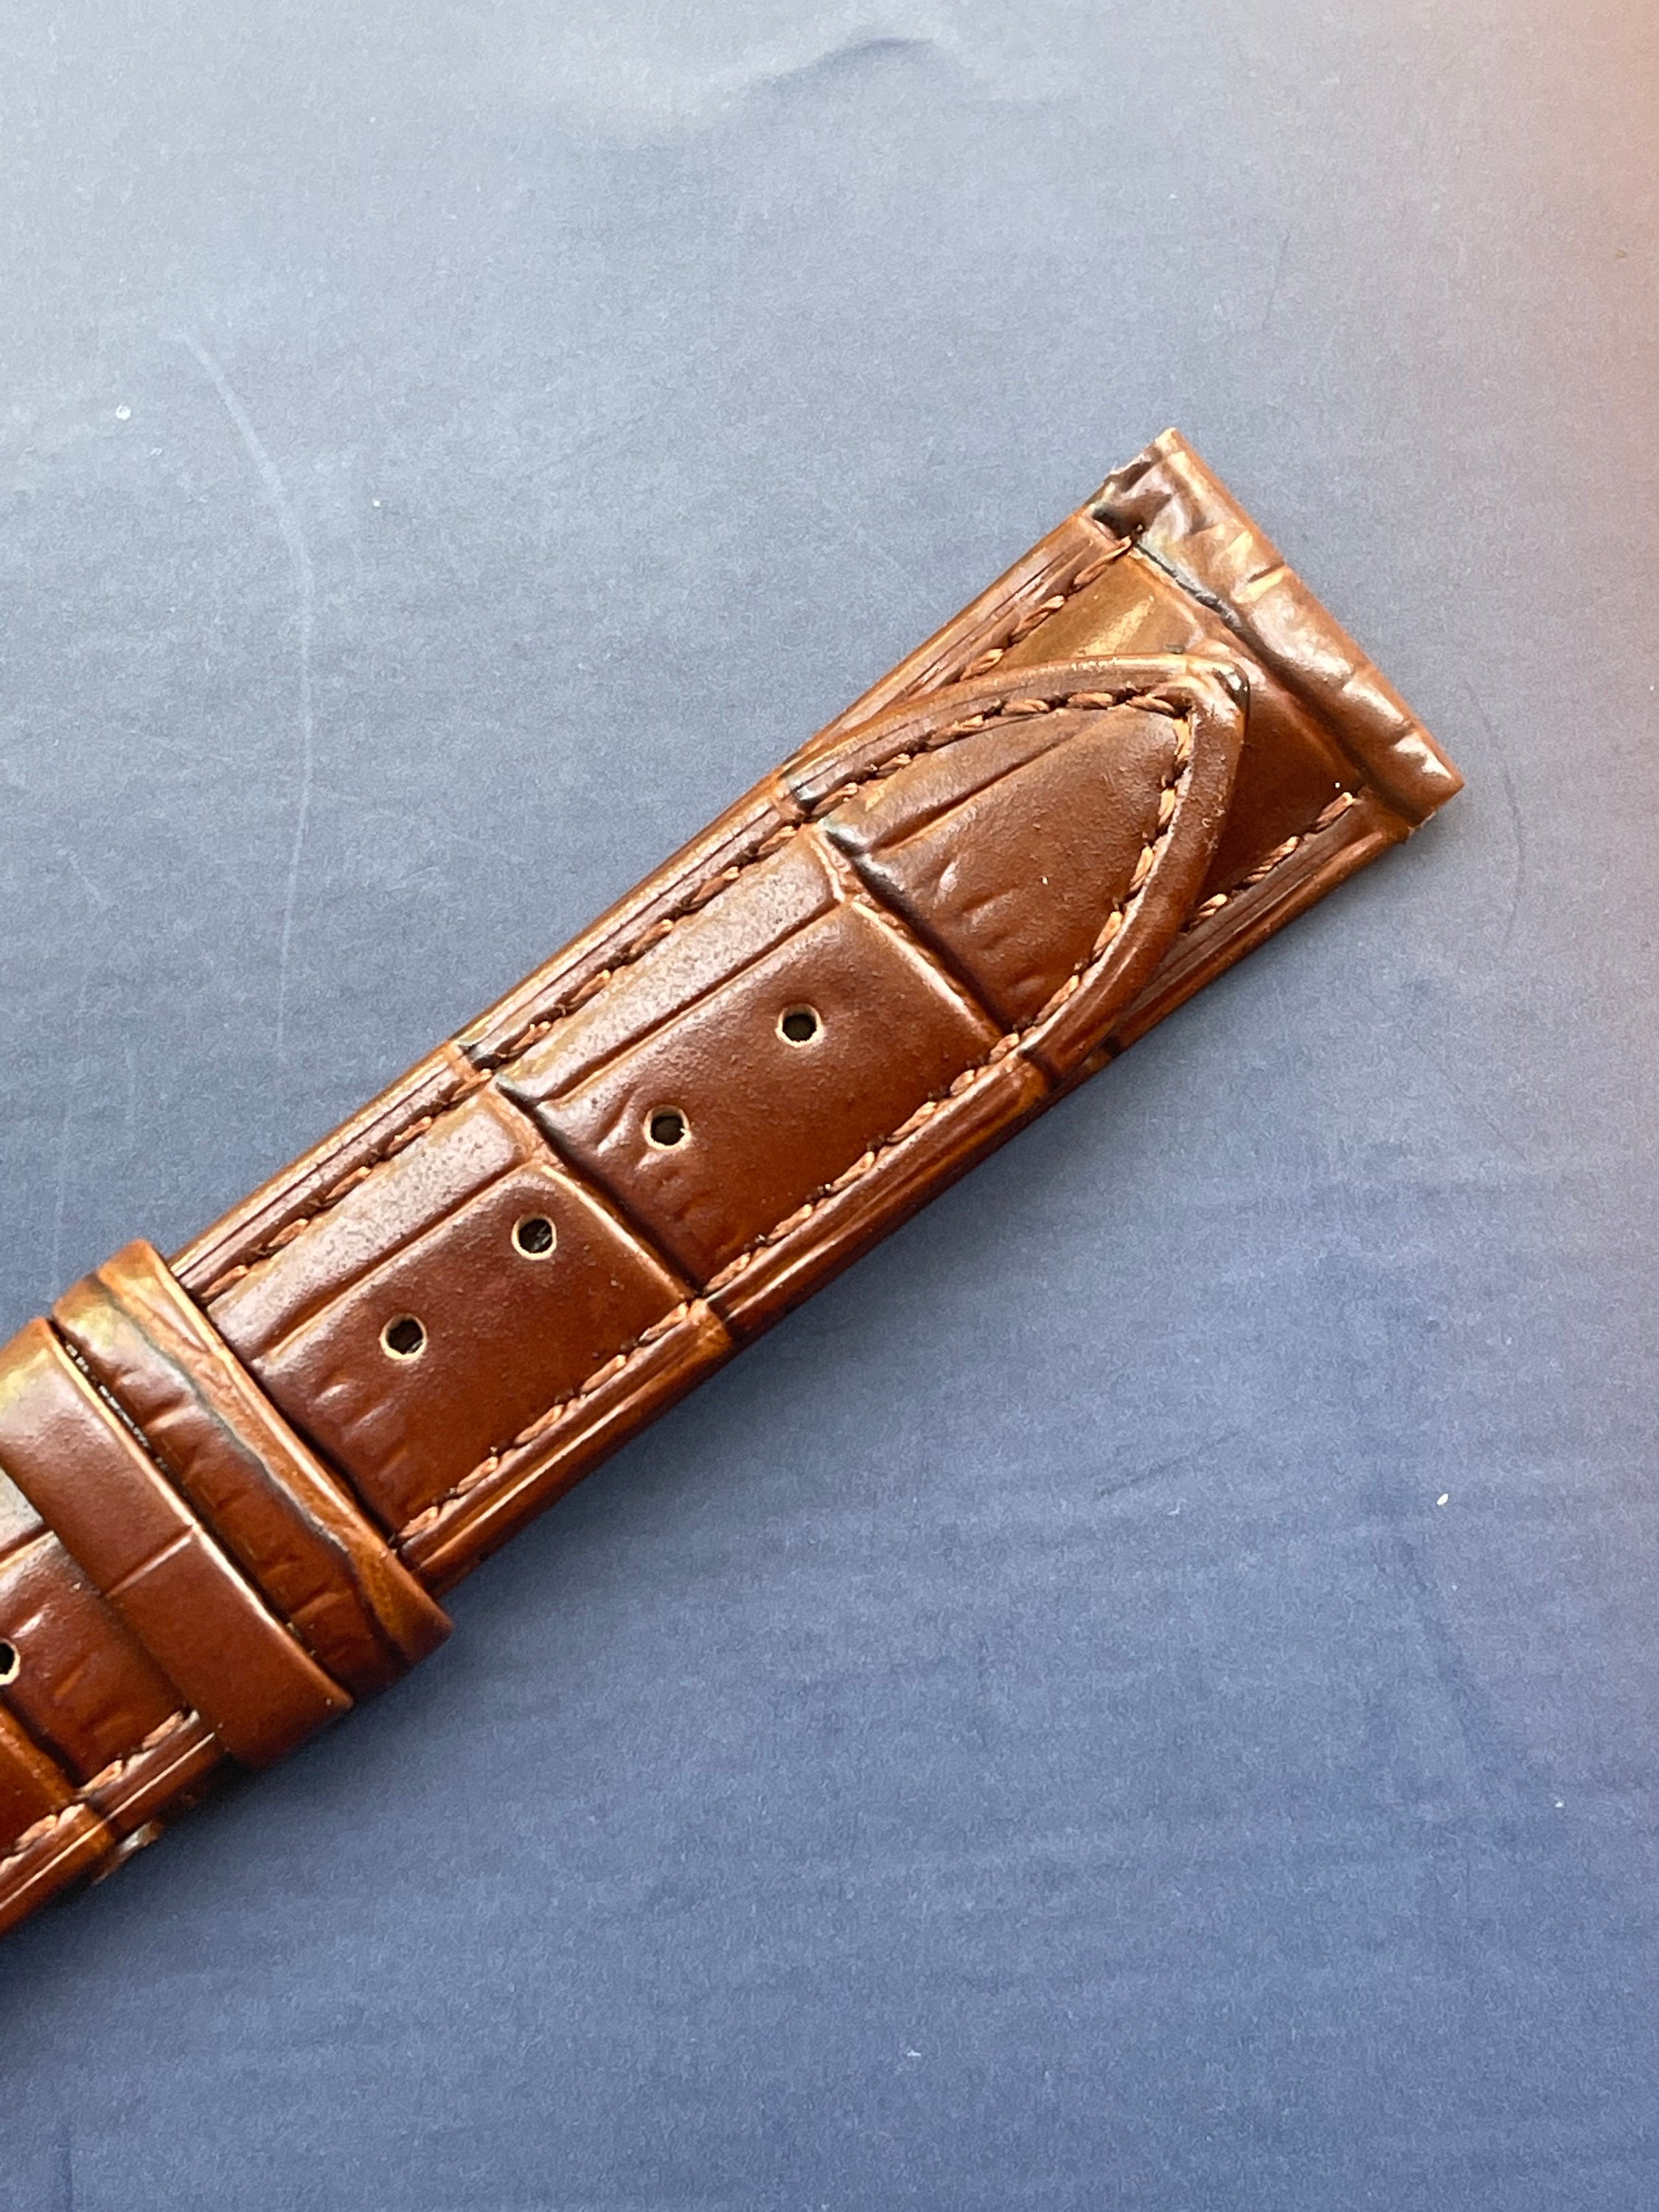 20mm Brown Alligator Leather Watch Strap. Handmade Padded | Etsy